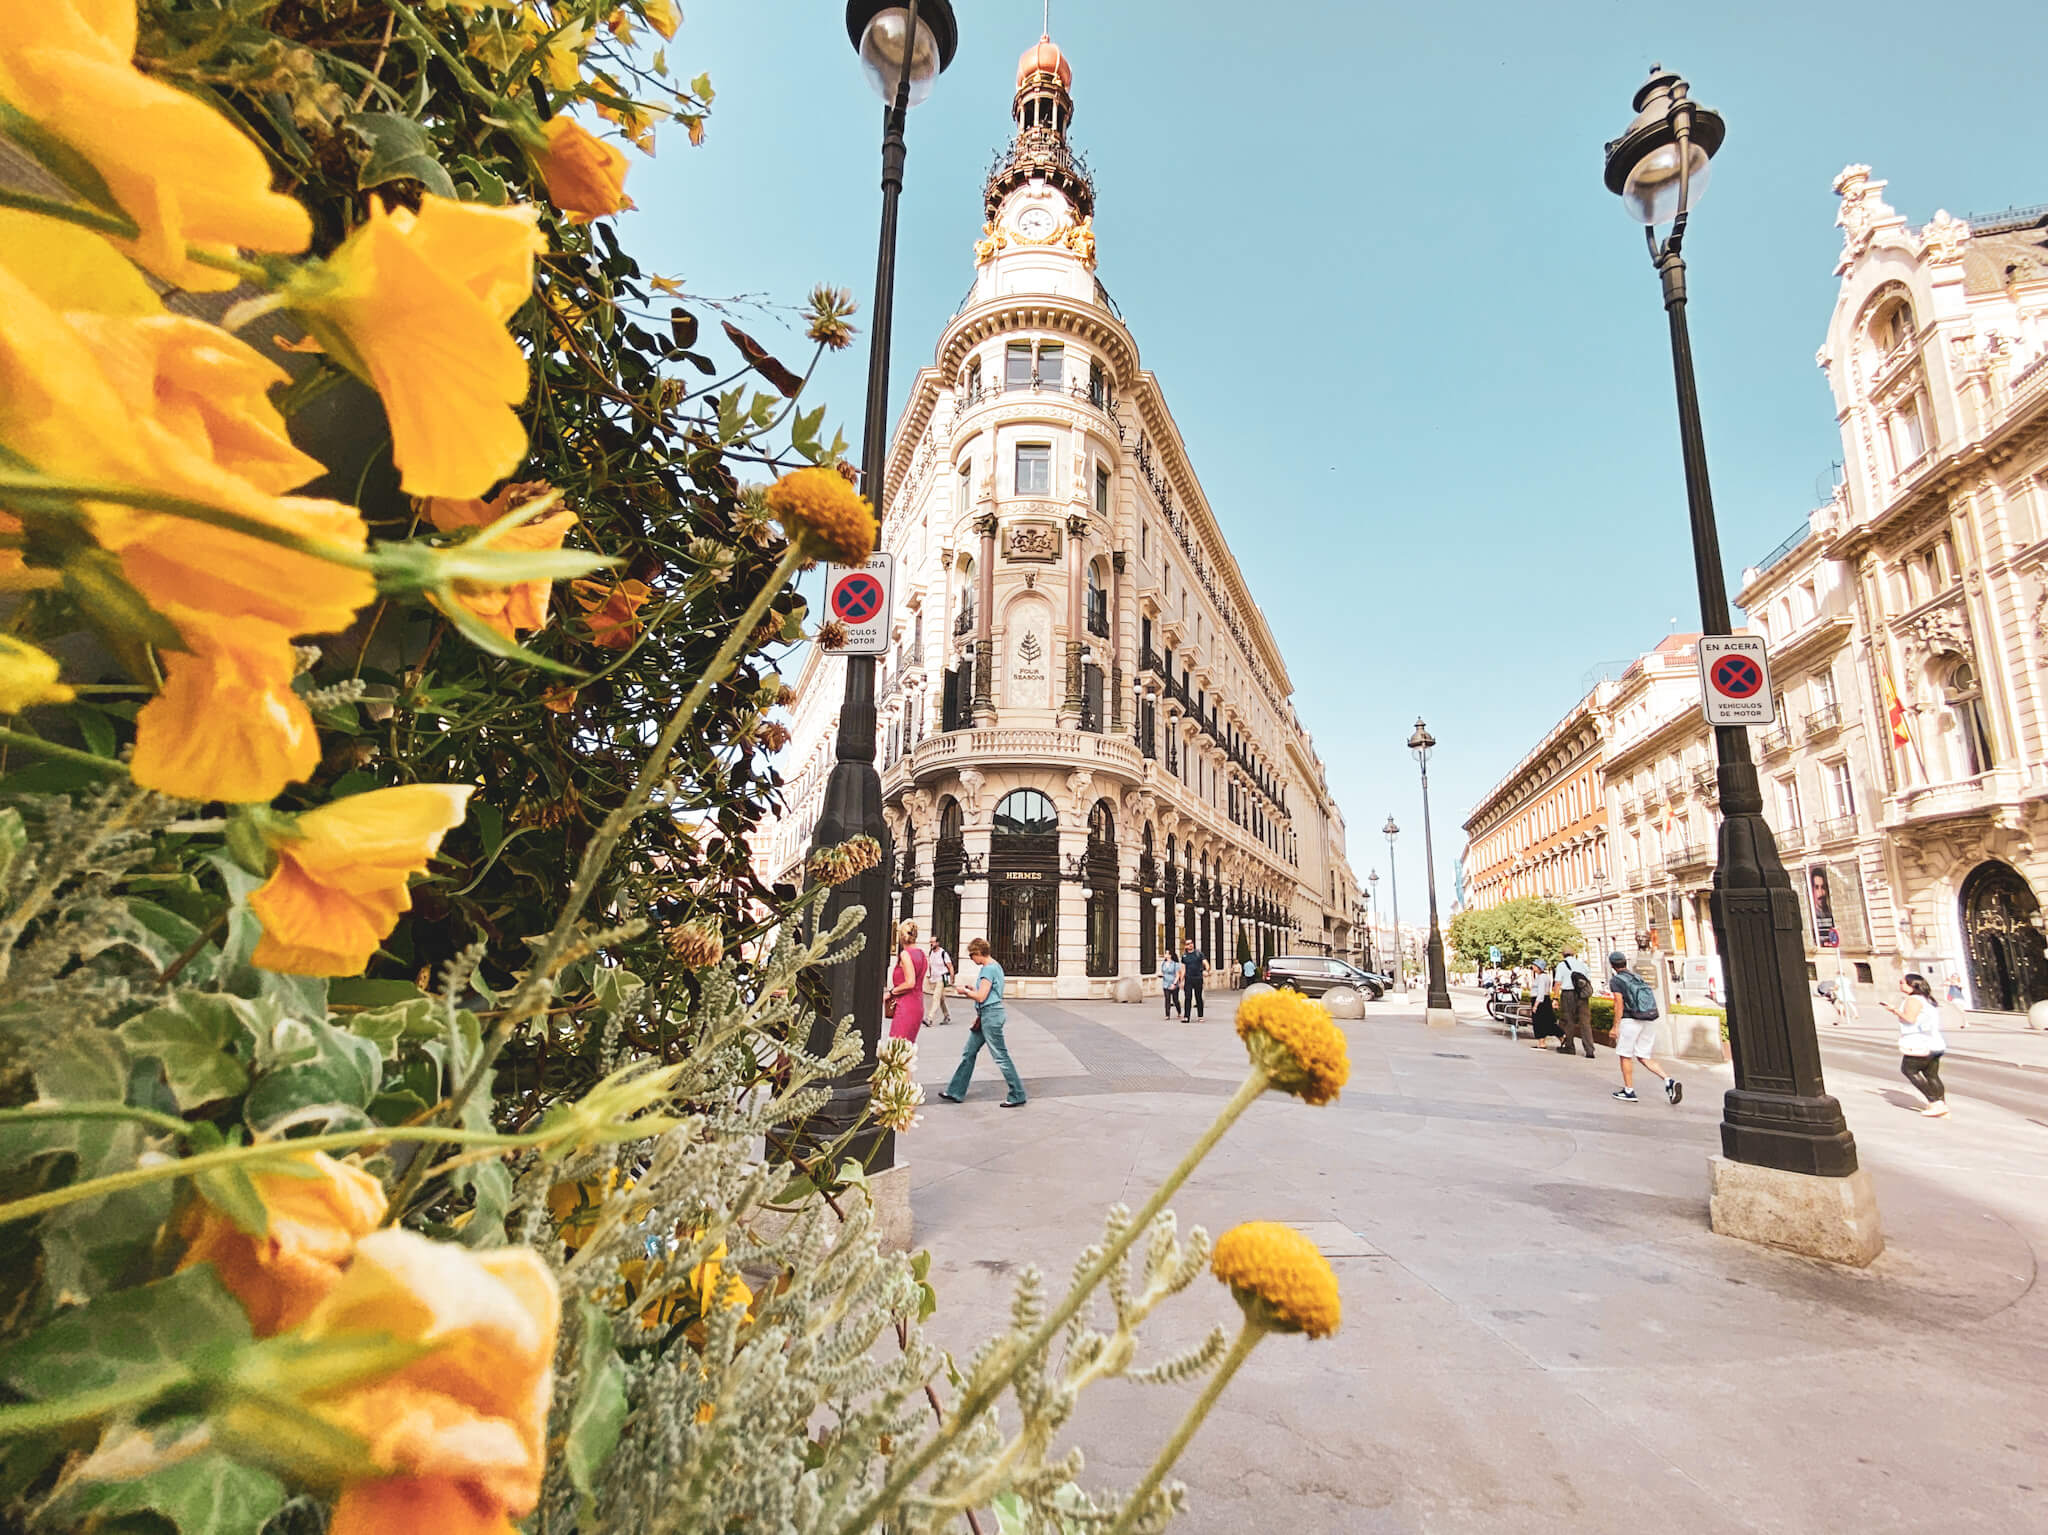 Das Four Seasons Hotel mit prächtiger Fassade in Madrid